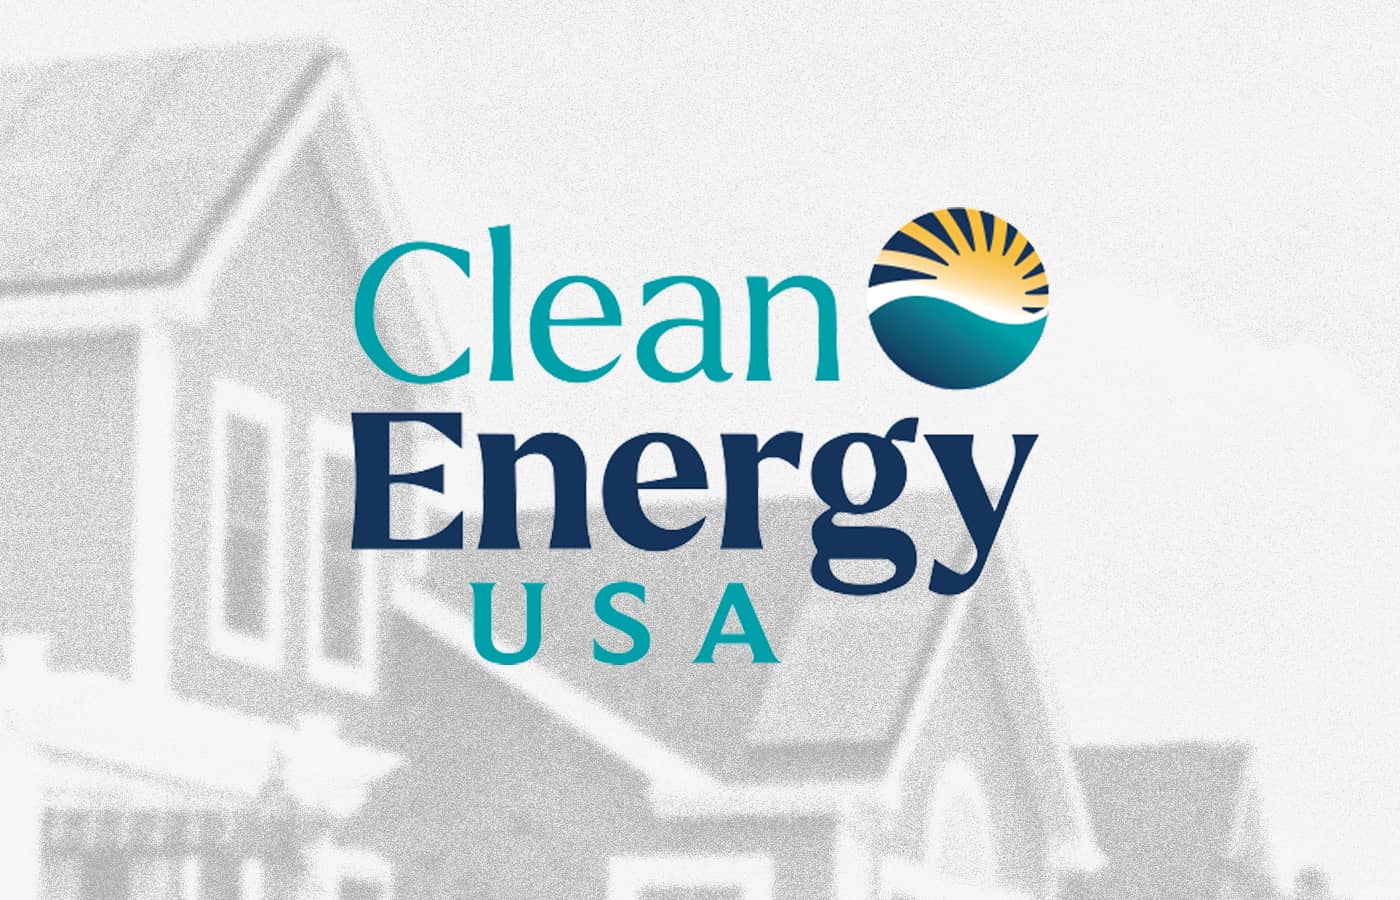 Clean Energy USA logo on grainy background